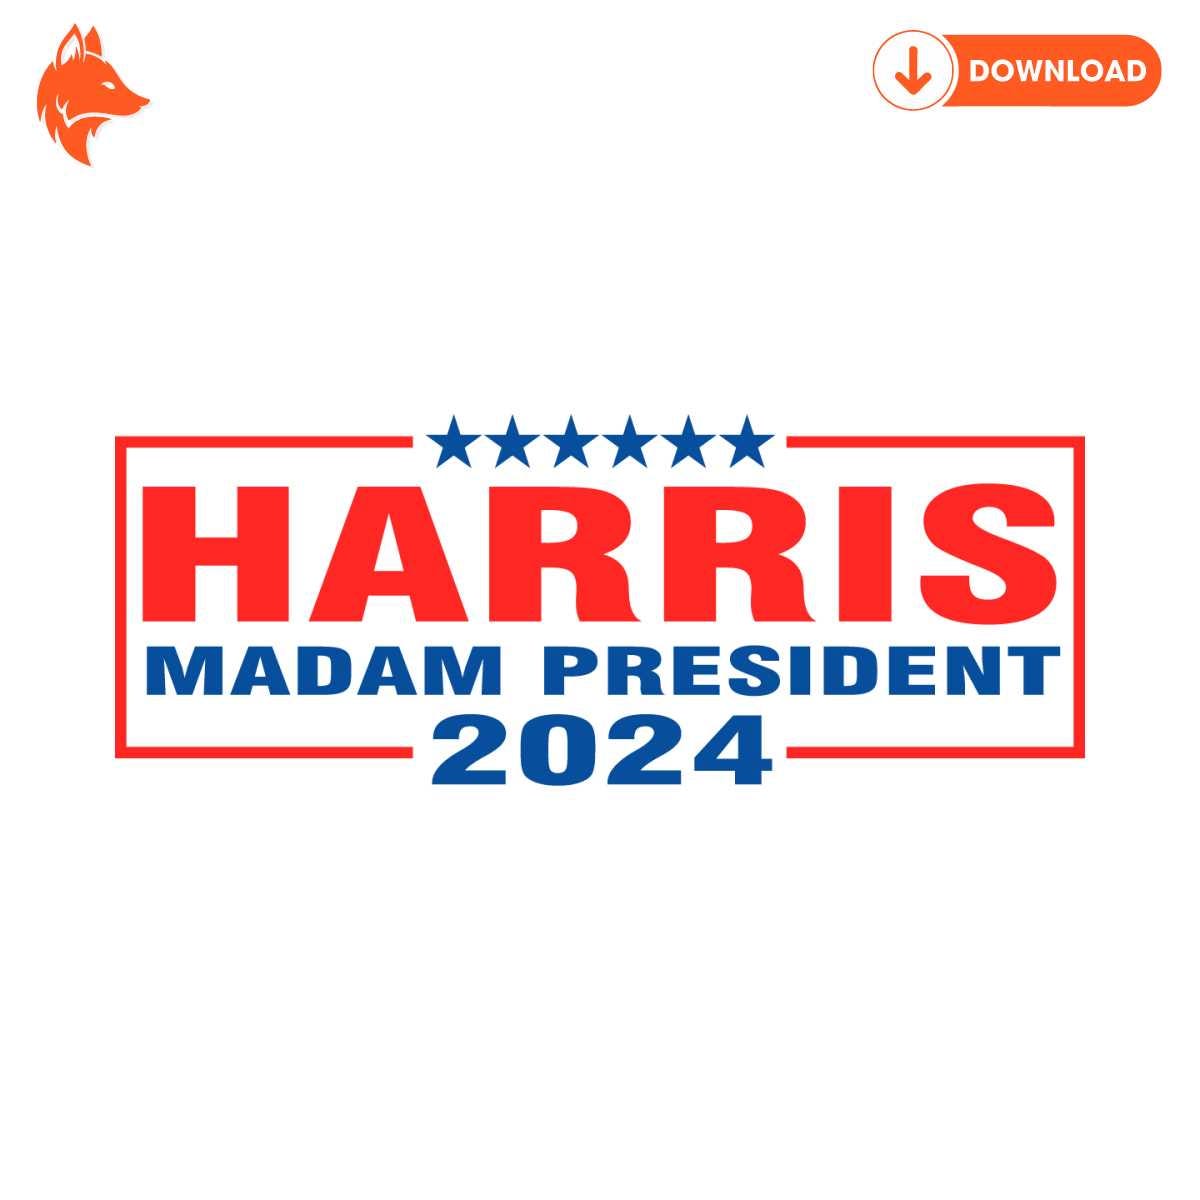 Free Harris Madam President 2024 Supporter SVG